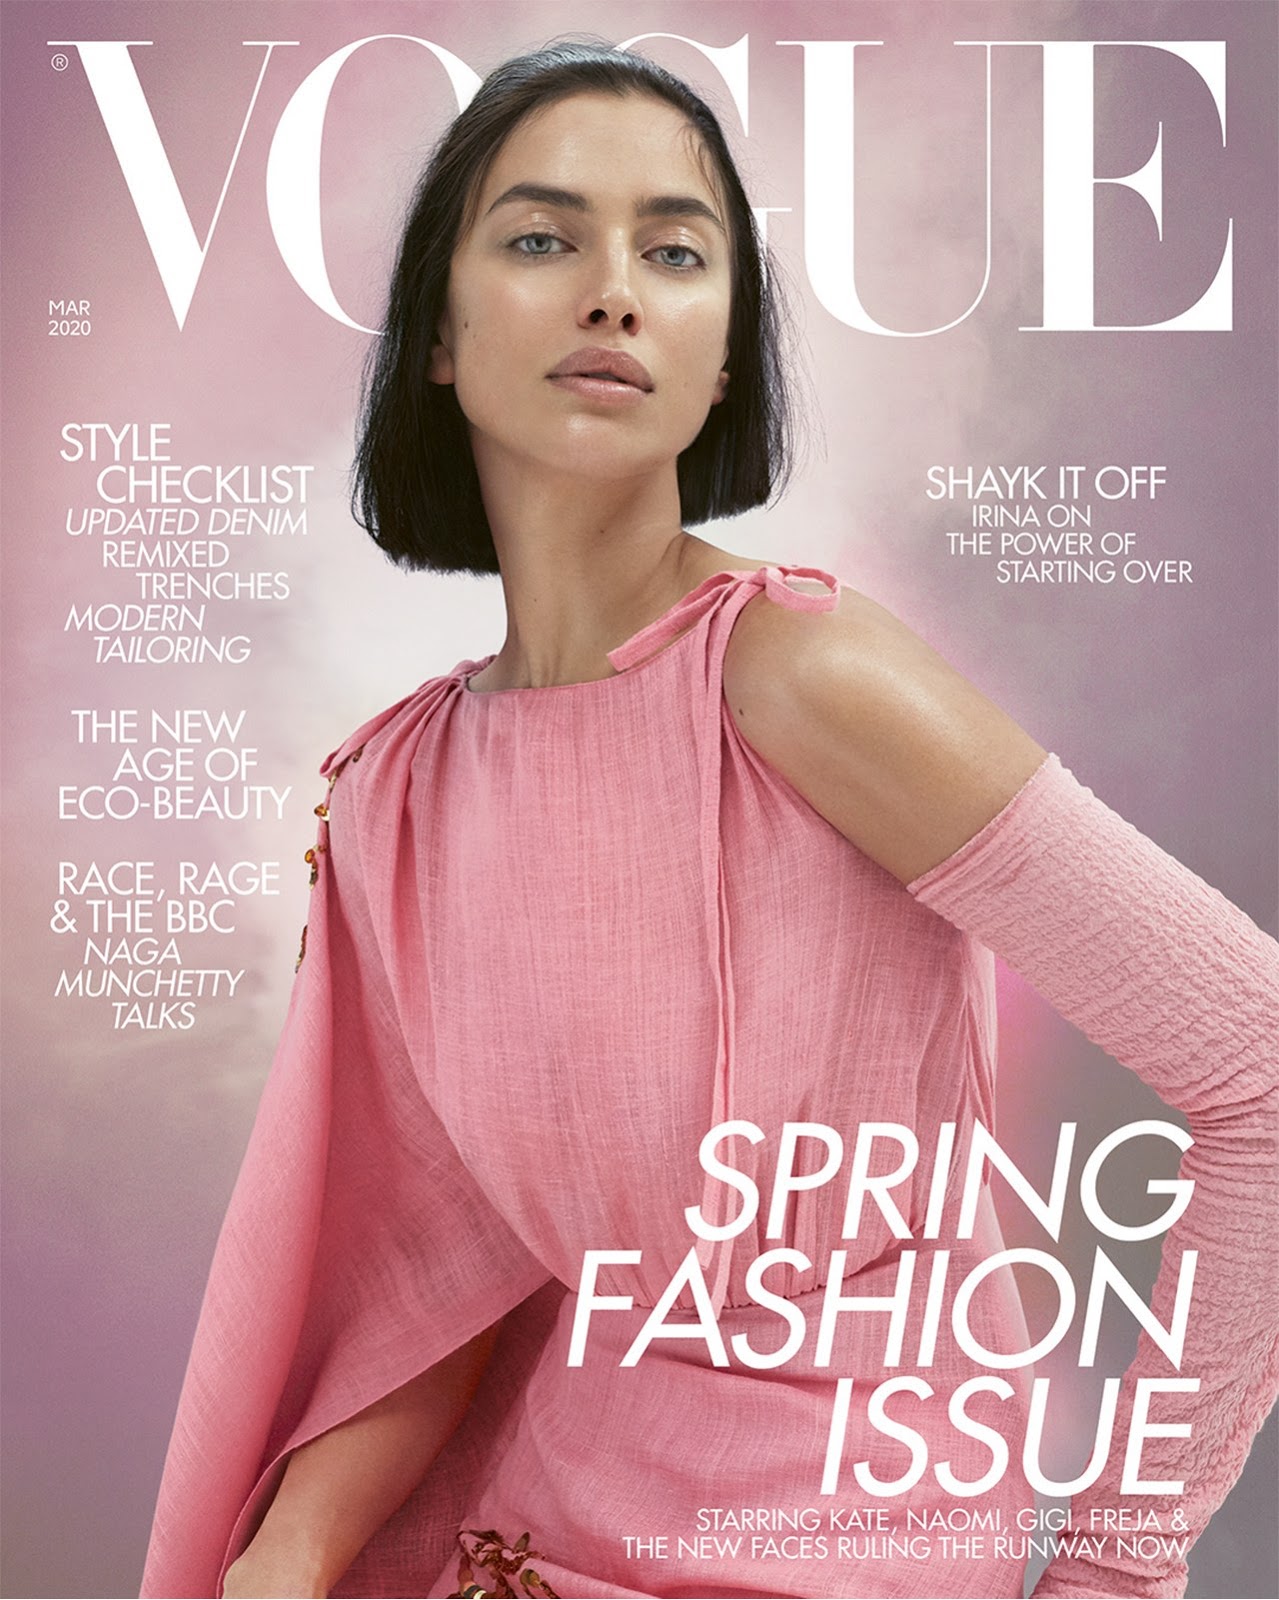 Vogue Fashion Style Beauty March 2002 Gisele by Thomas Schenk Louis Vuitton